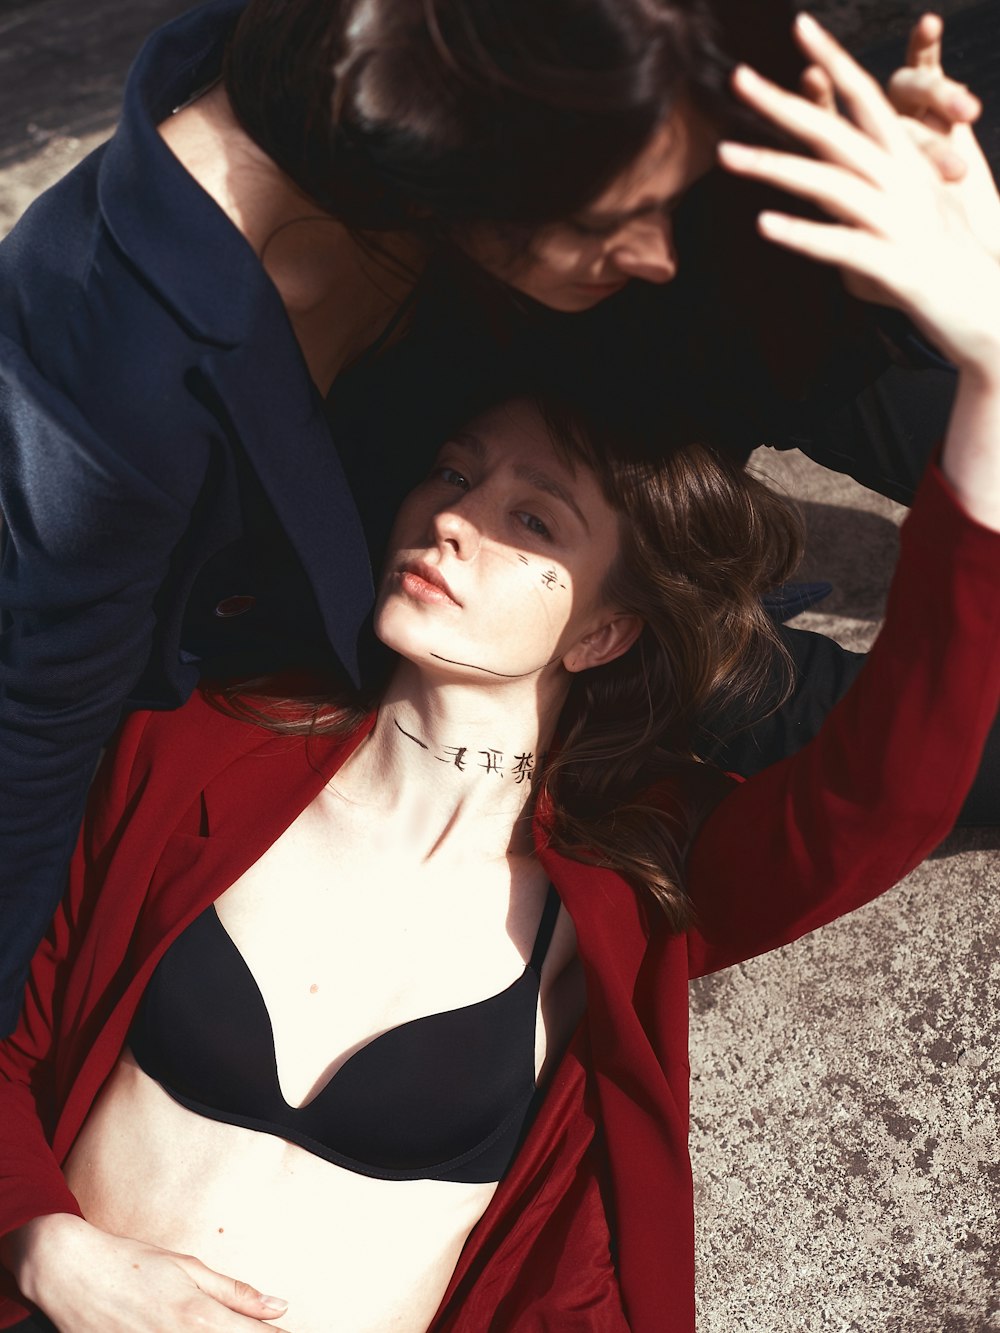 Woman lying on man in blue blazer photo – Free Fashion Image on Unsplash